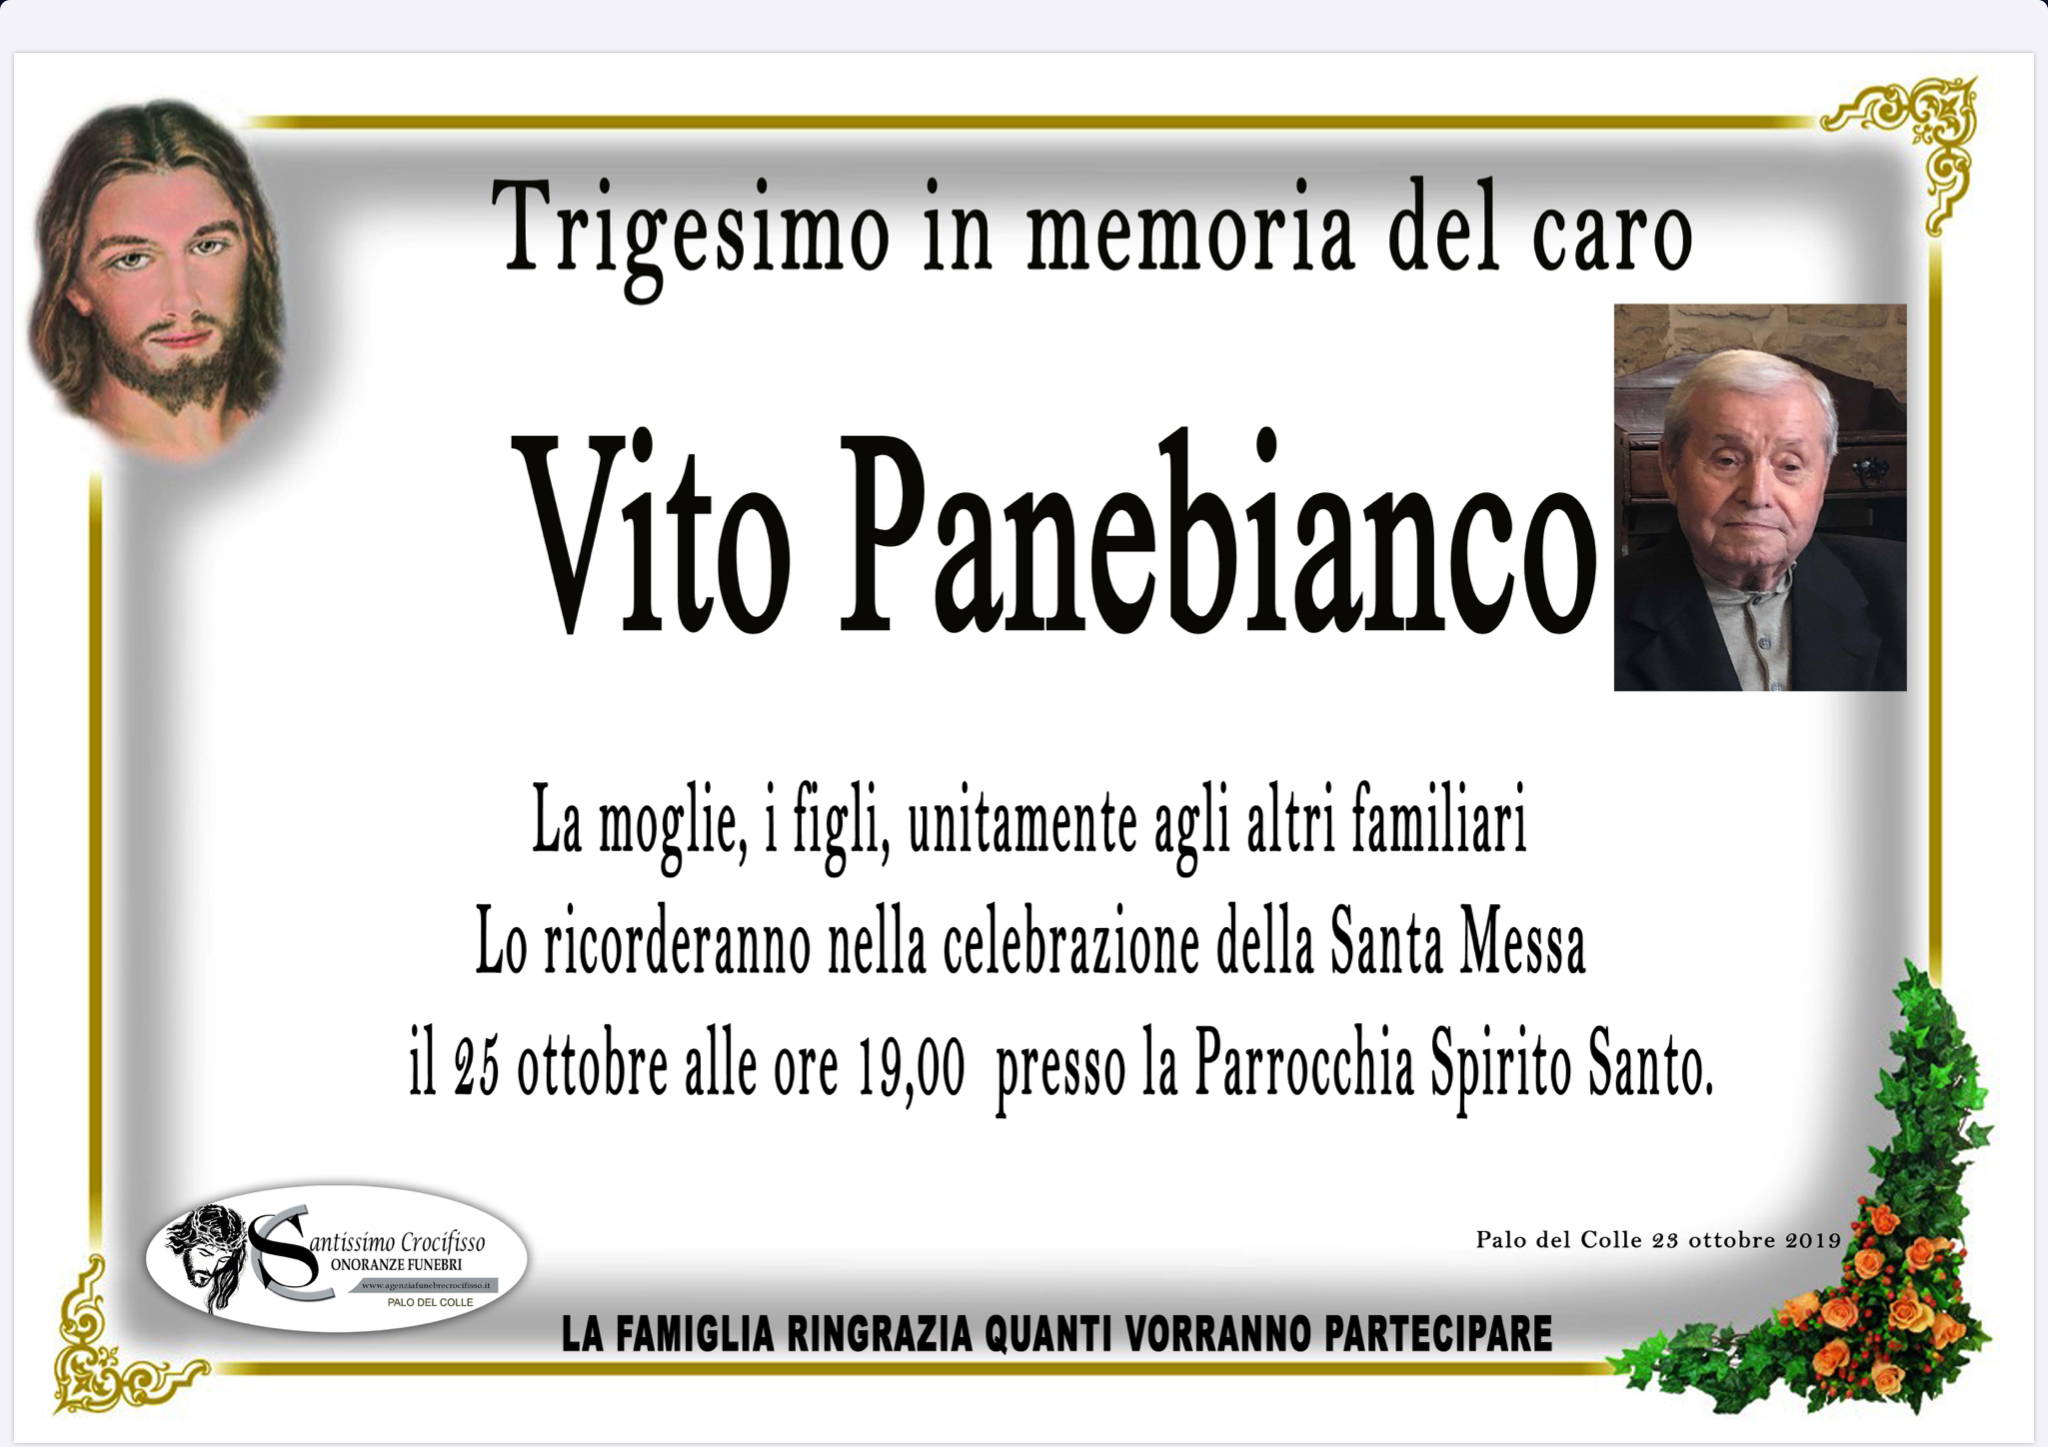 Vito Panebianco